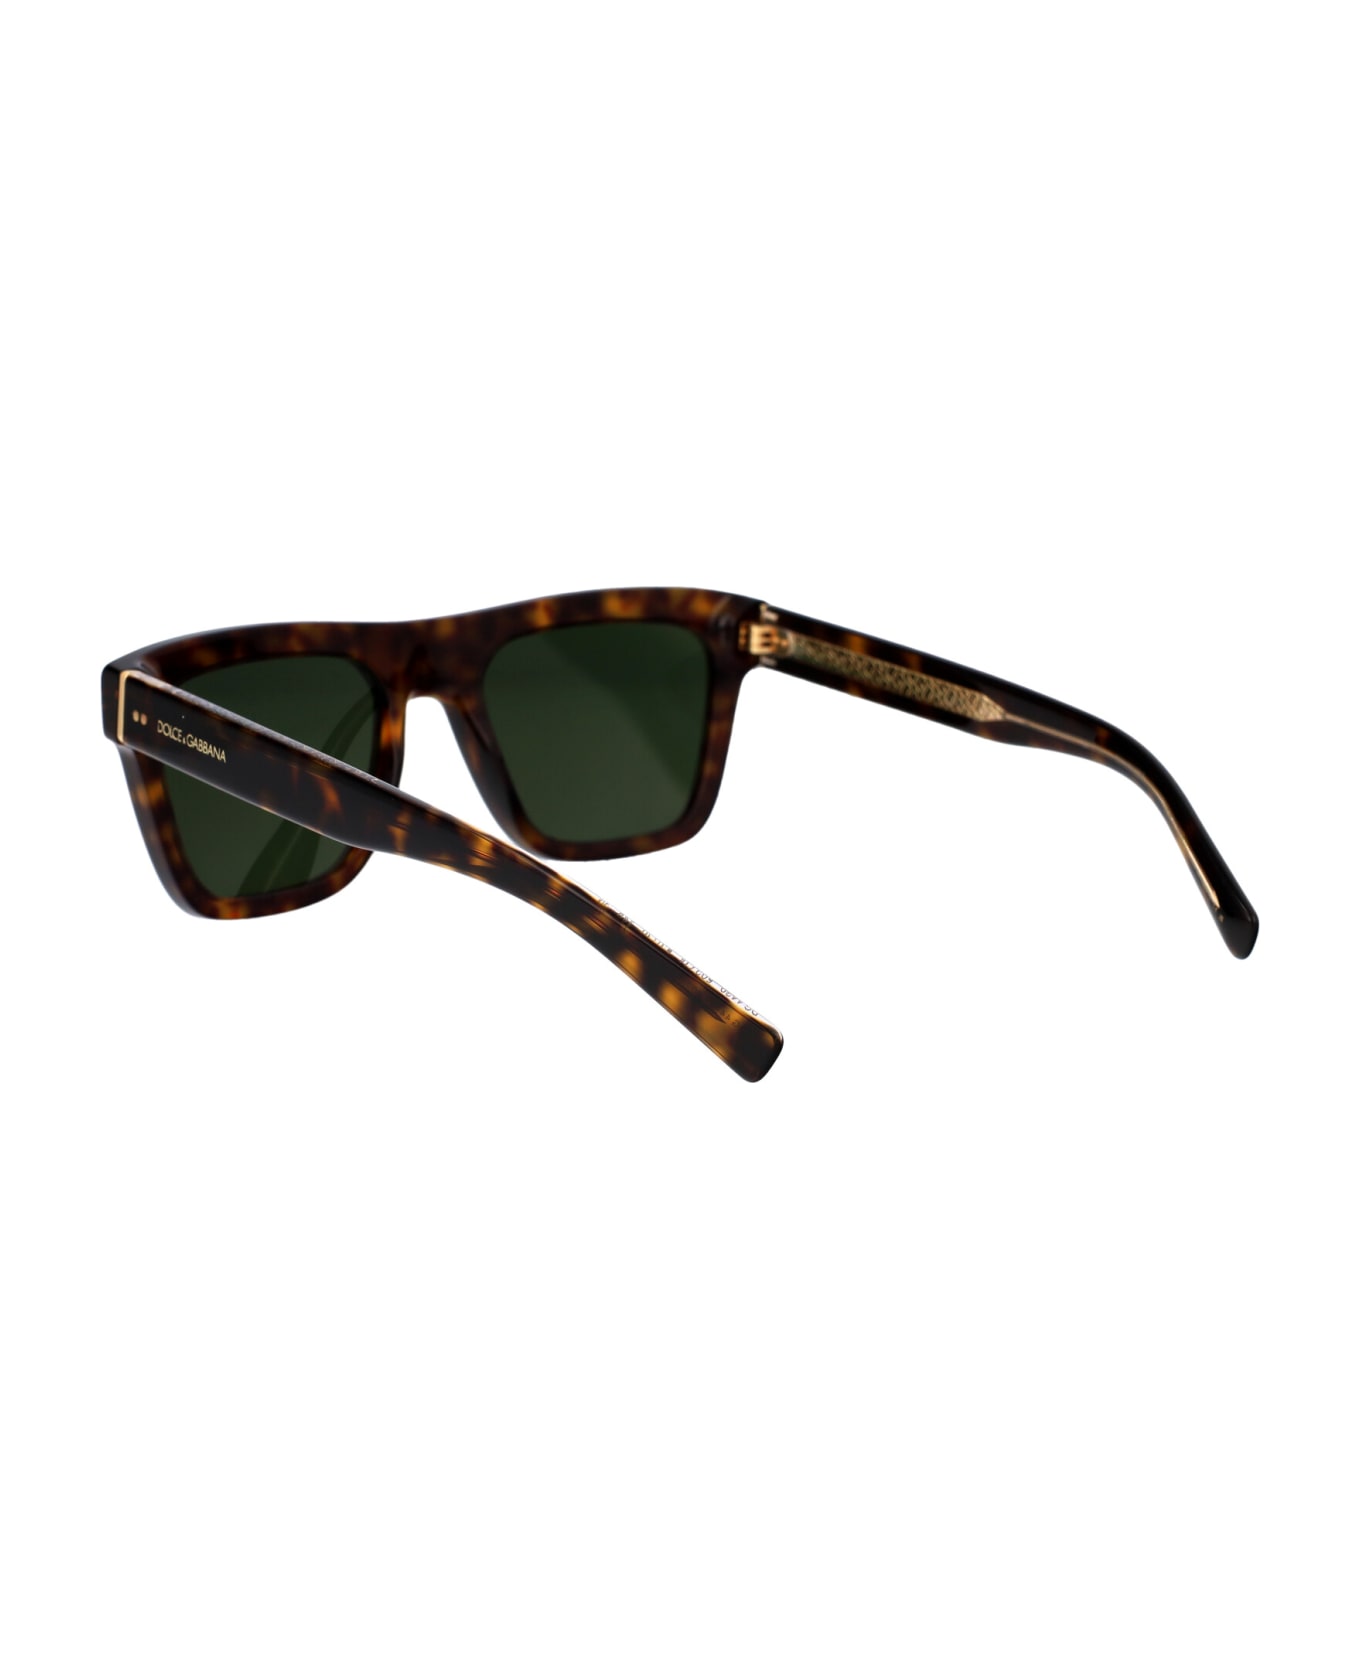 Dolce & Gabbana Eyewear 0dg4413 Sunglasses - 675/R5 Black/Crystal